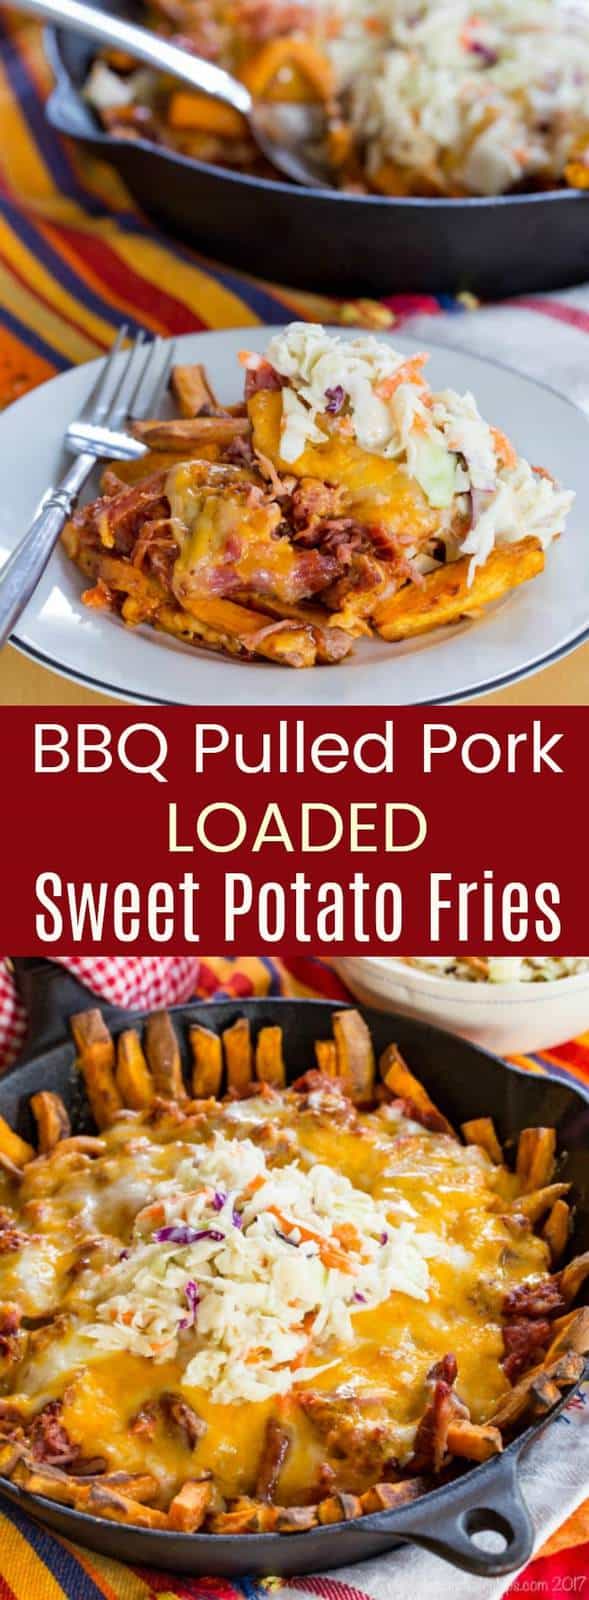 BBQ Pulled Pork Loaded Sweet Potato Fries - Cupcakes ... - 589 x 1600 jpeg 82kB